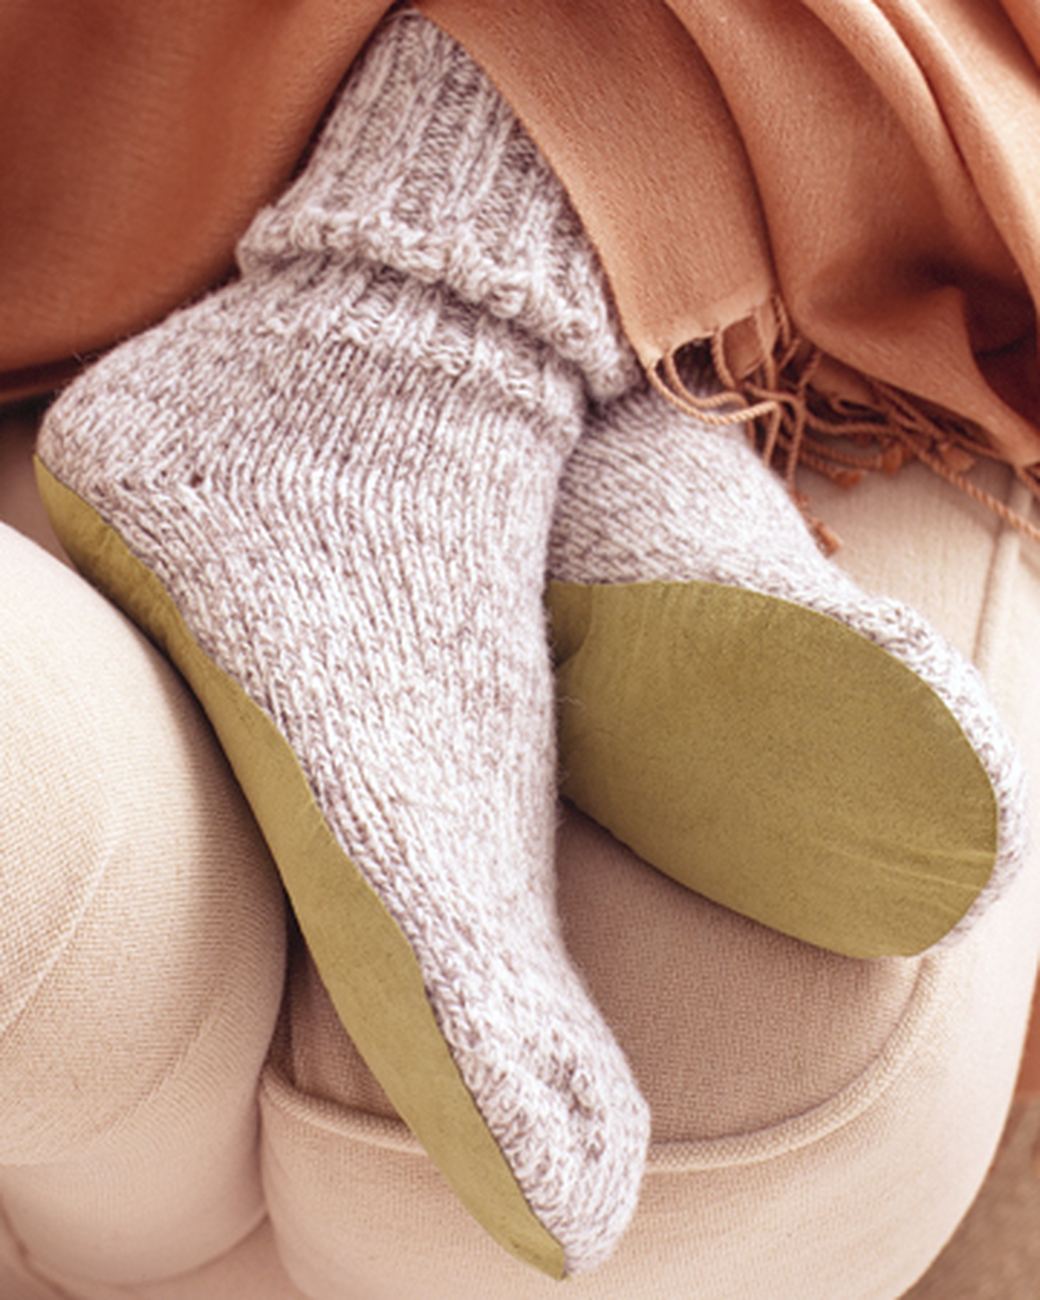 What to Get Your Boyfriend for Christmas - Slipper Socks